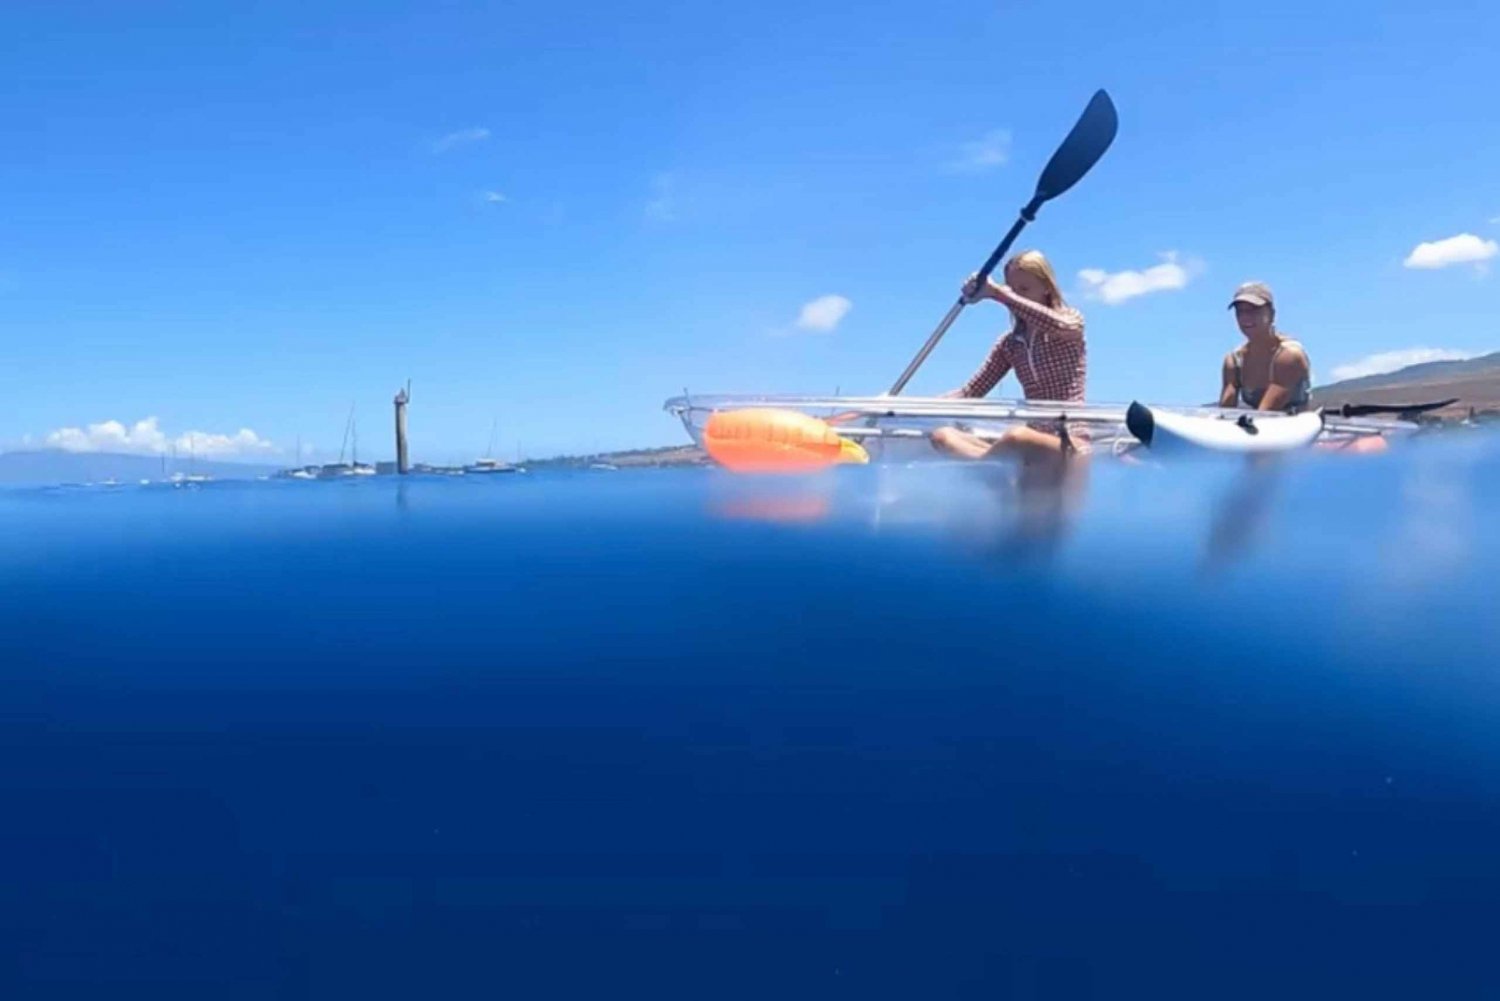 Noleggio kayak vetroso con fondo trasparente | Kayak sicuri e stabili